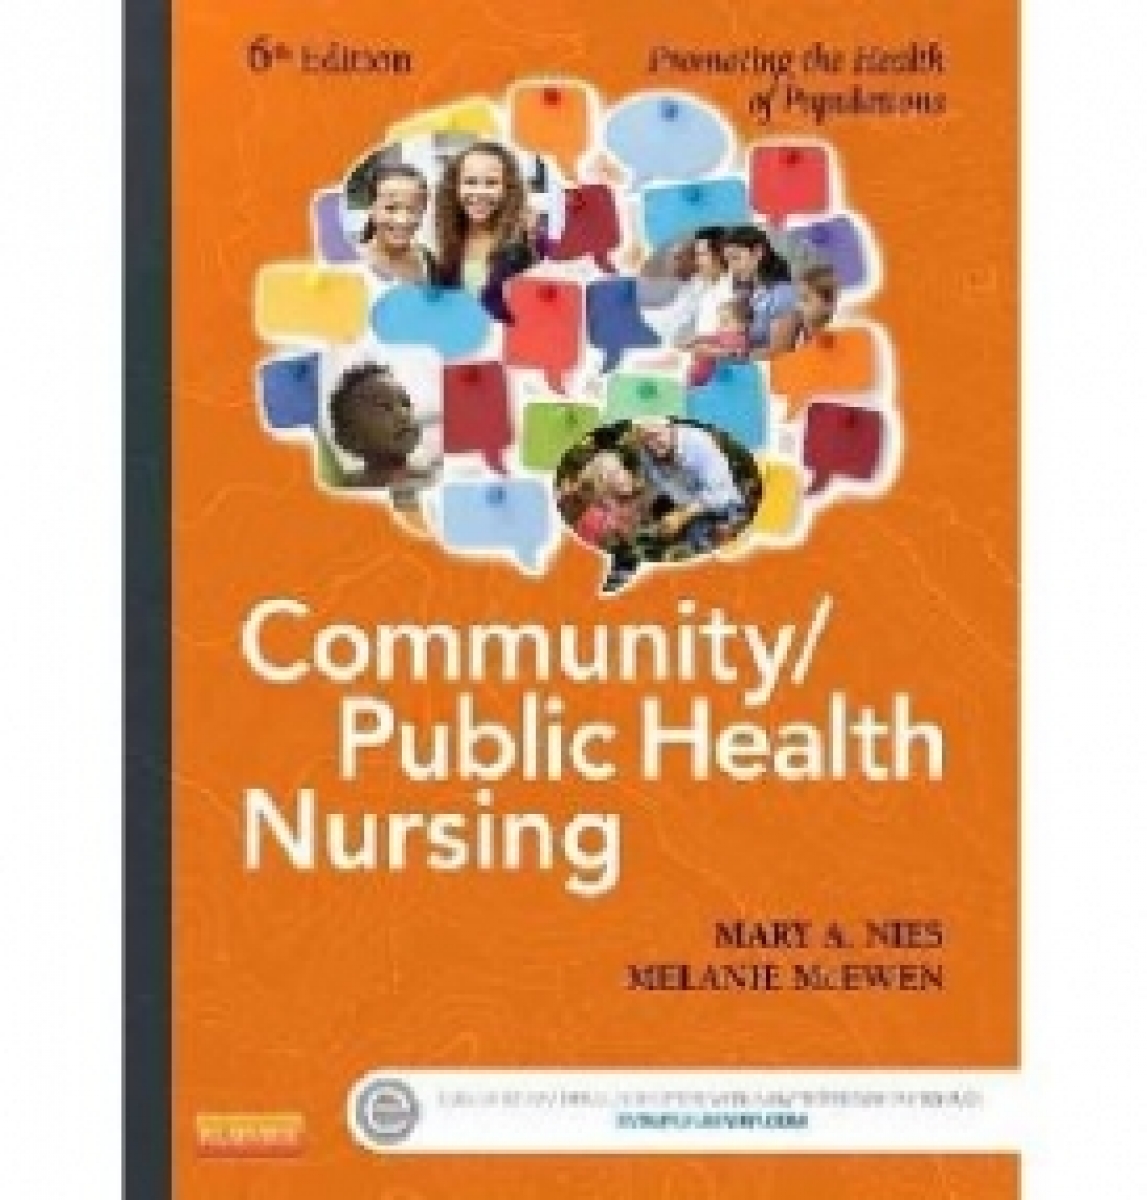 Nies Mary A., McEwen Melanie Community/Public Health Nursing: Promoting the Health of Populations 